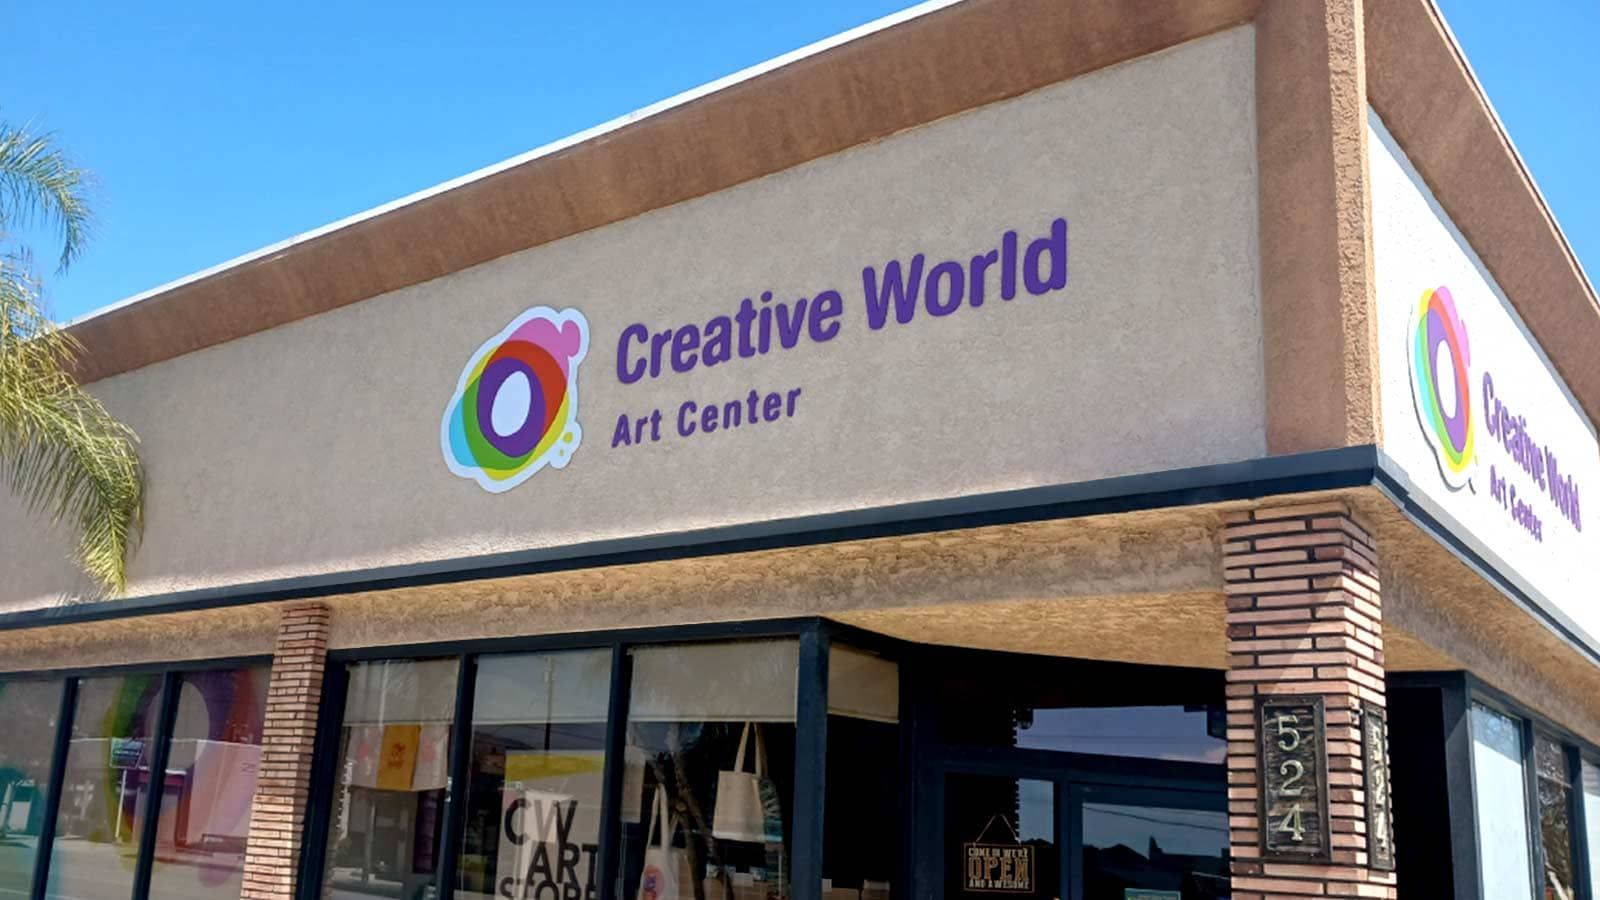 Creative World Art Center modern sign on the building